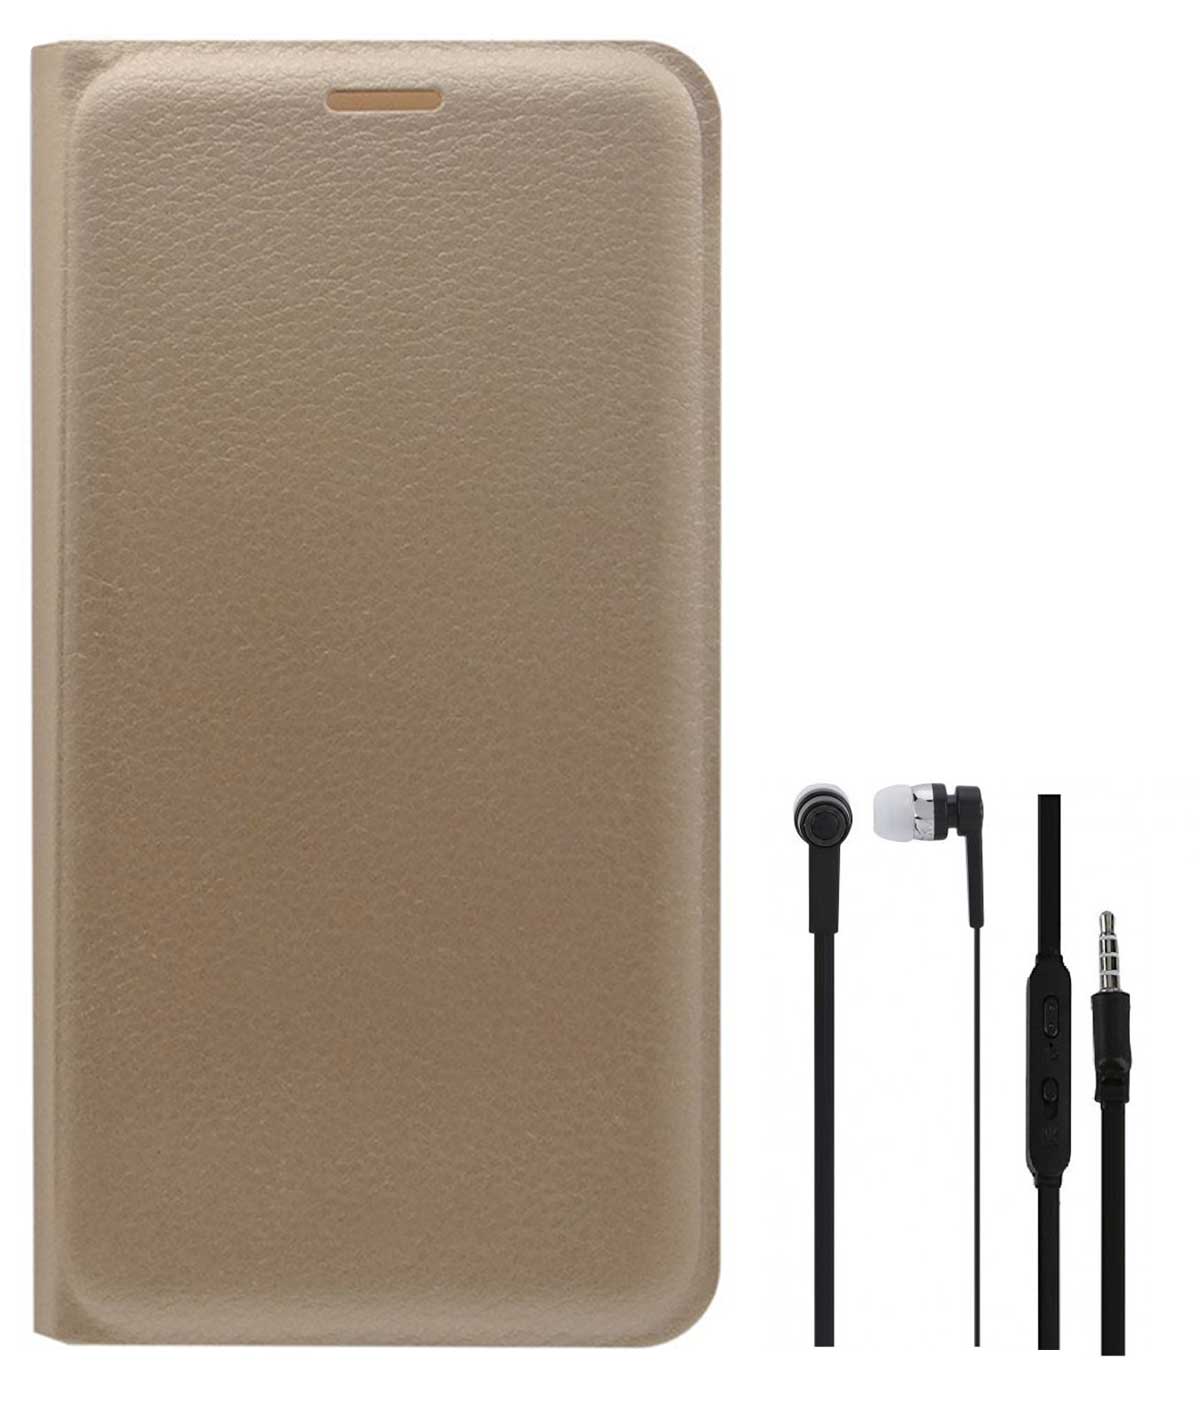 TBZ PU Leather Flip Cover Case for Motorola Moto G5 Plus with Earphone  Golden